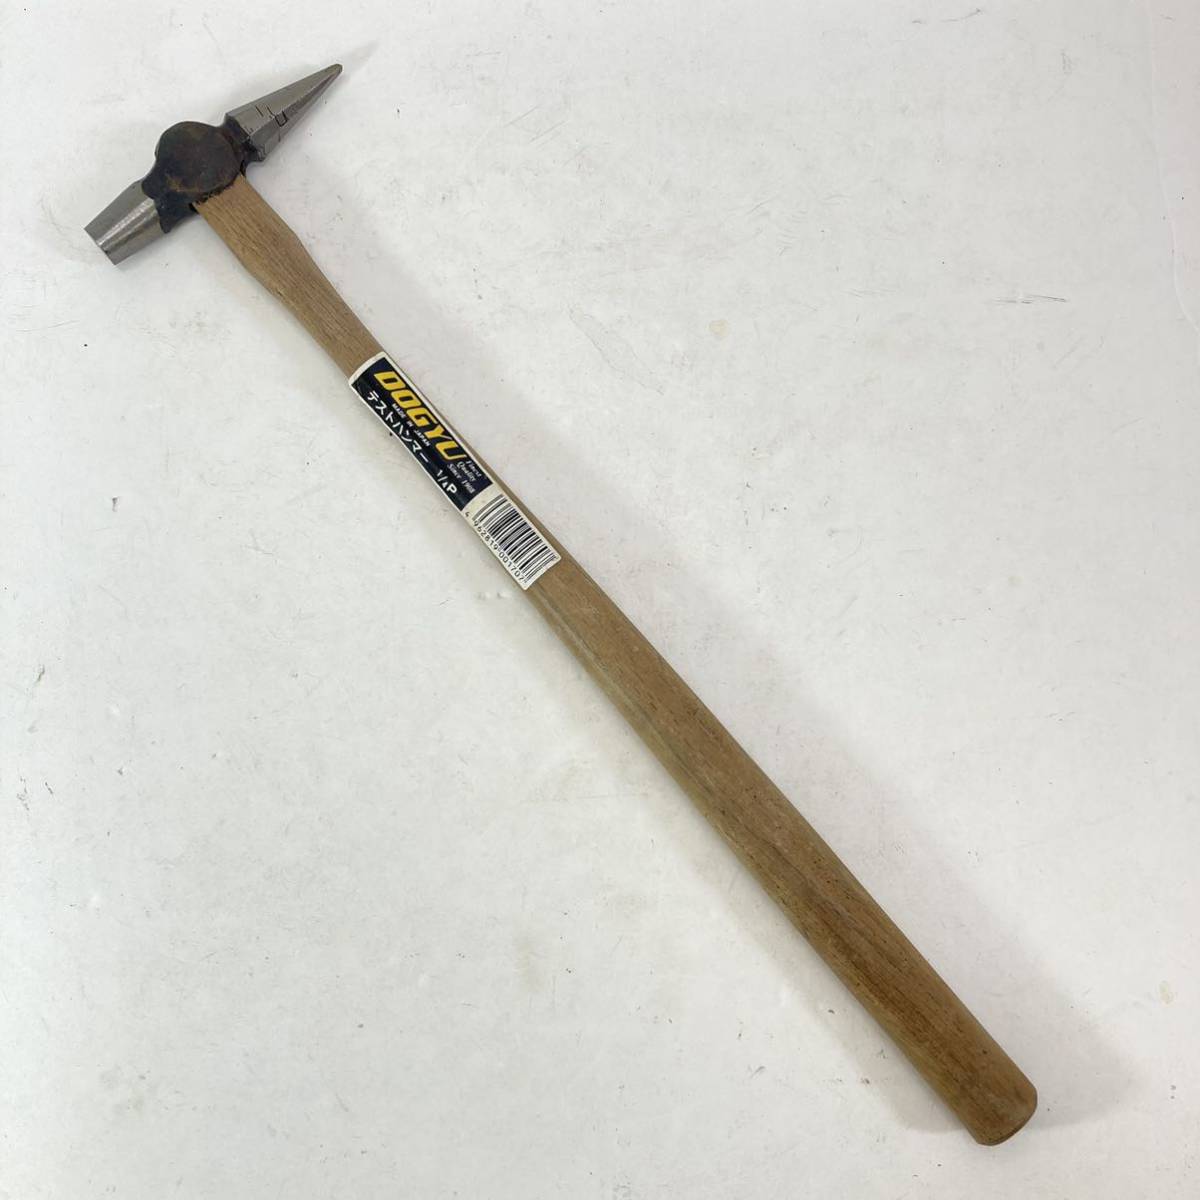  earth cow DOGYU test hammer gold hammer hammer 1/4P 15mm carpenter's tool railroad maintenance worker tool metallic material unused 